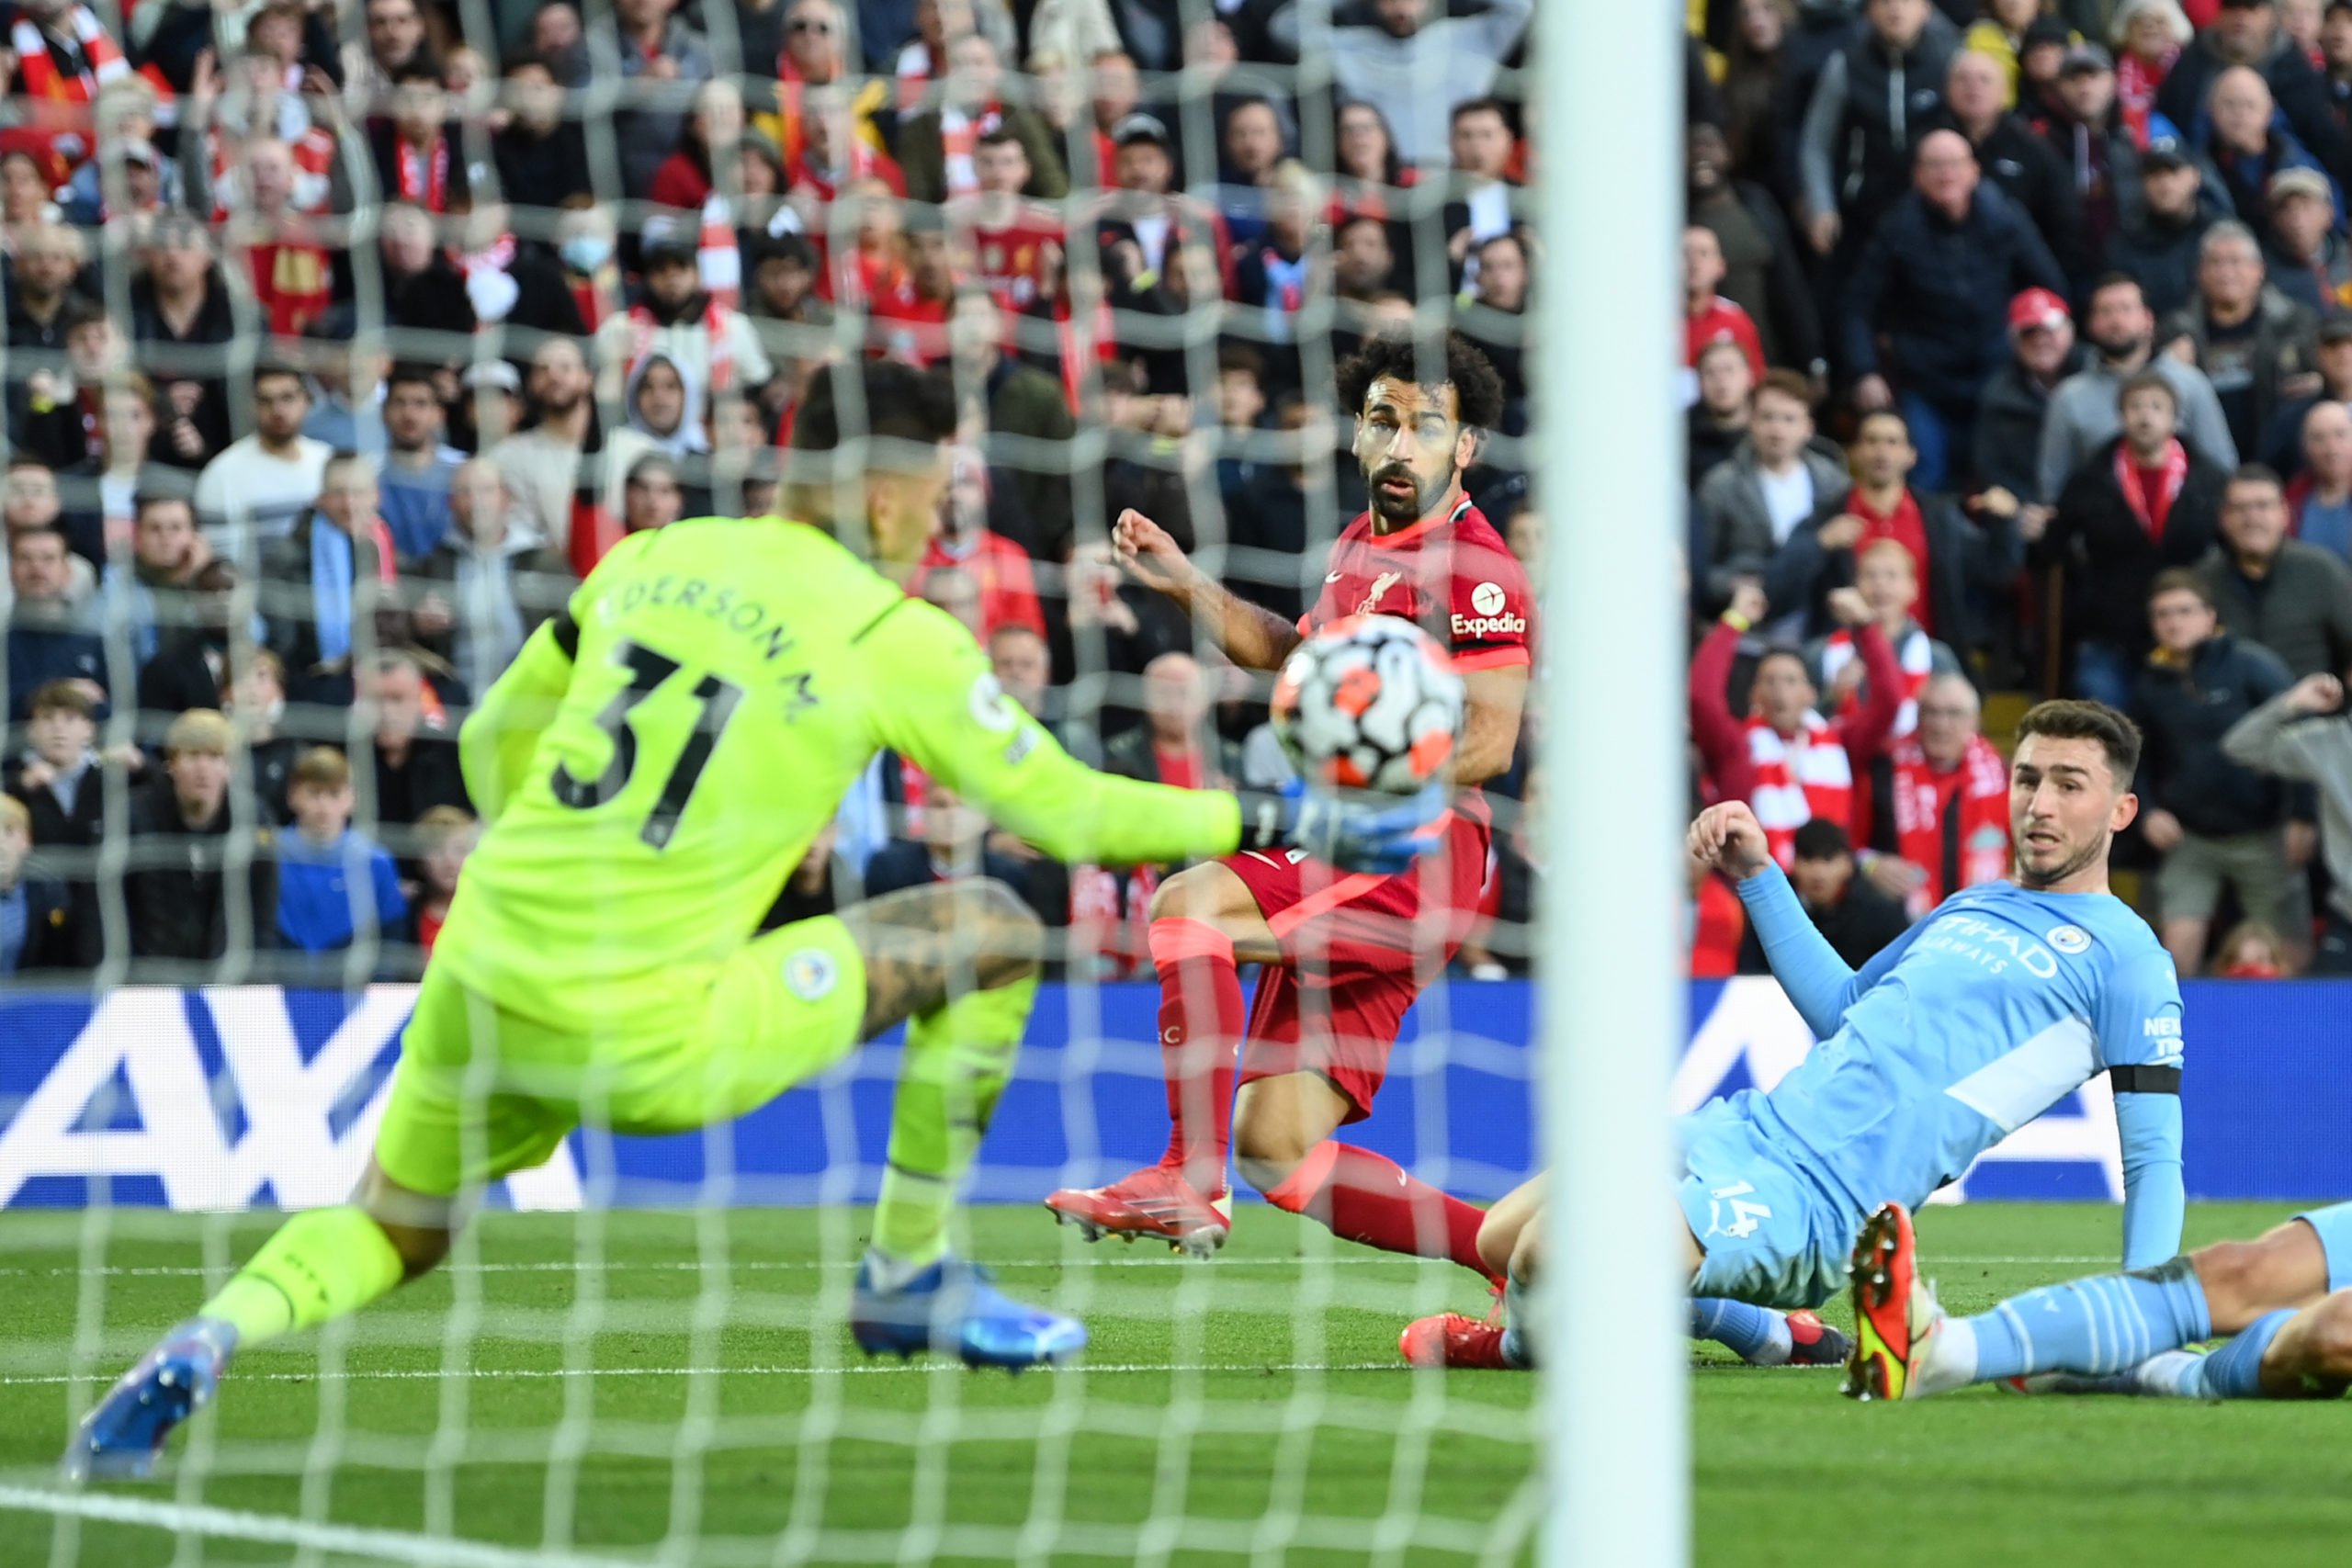 Liverpool winger Mohamed Salah scores a spectacular goal against Manchester City